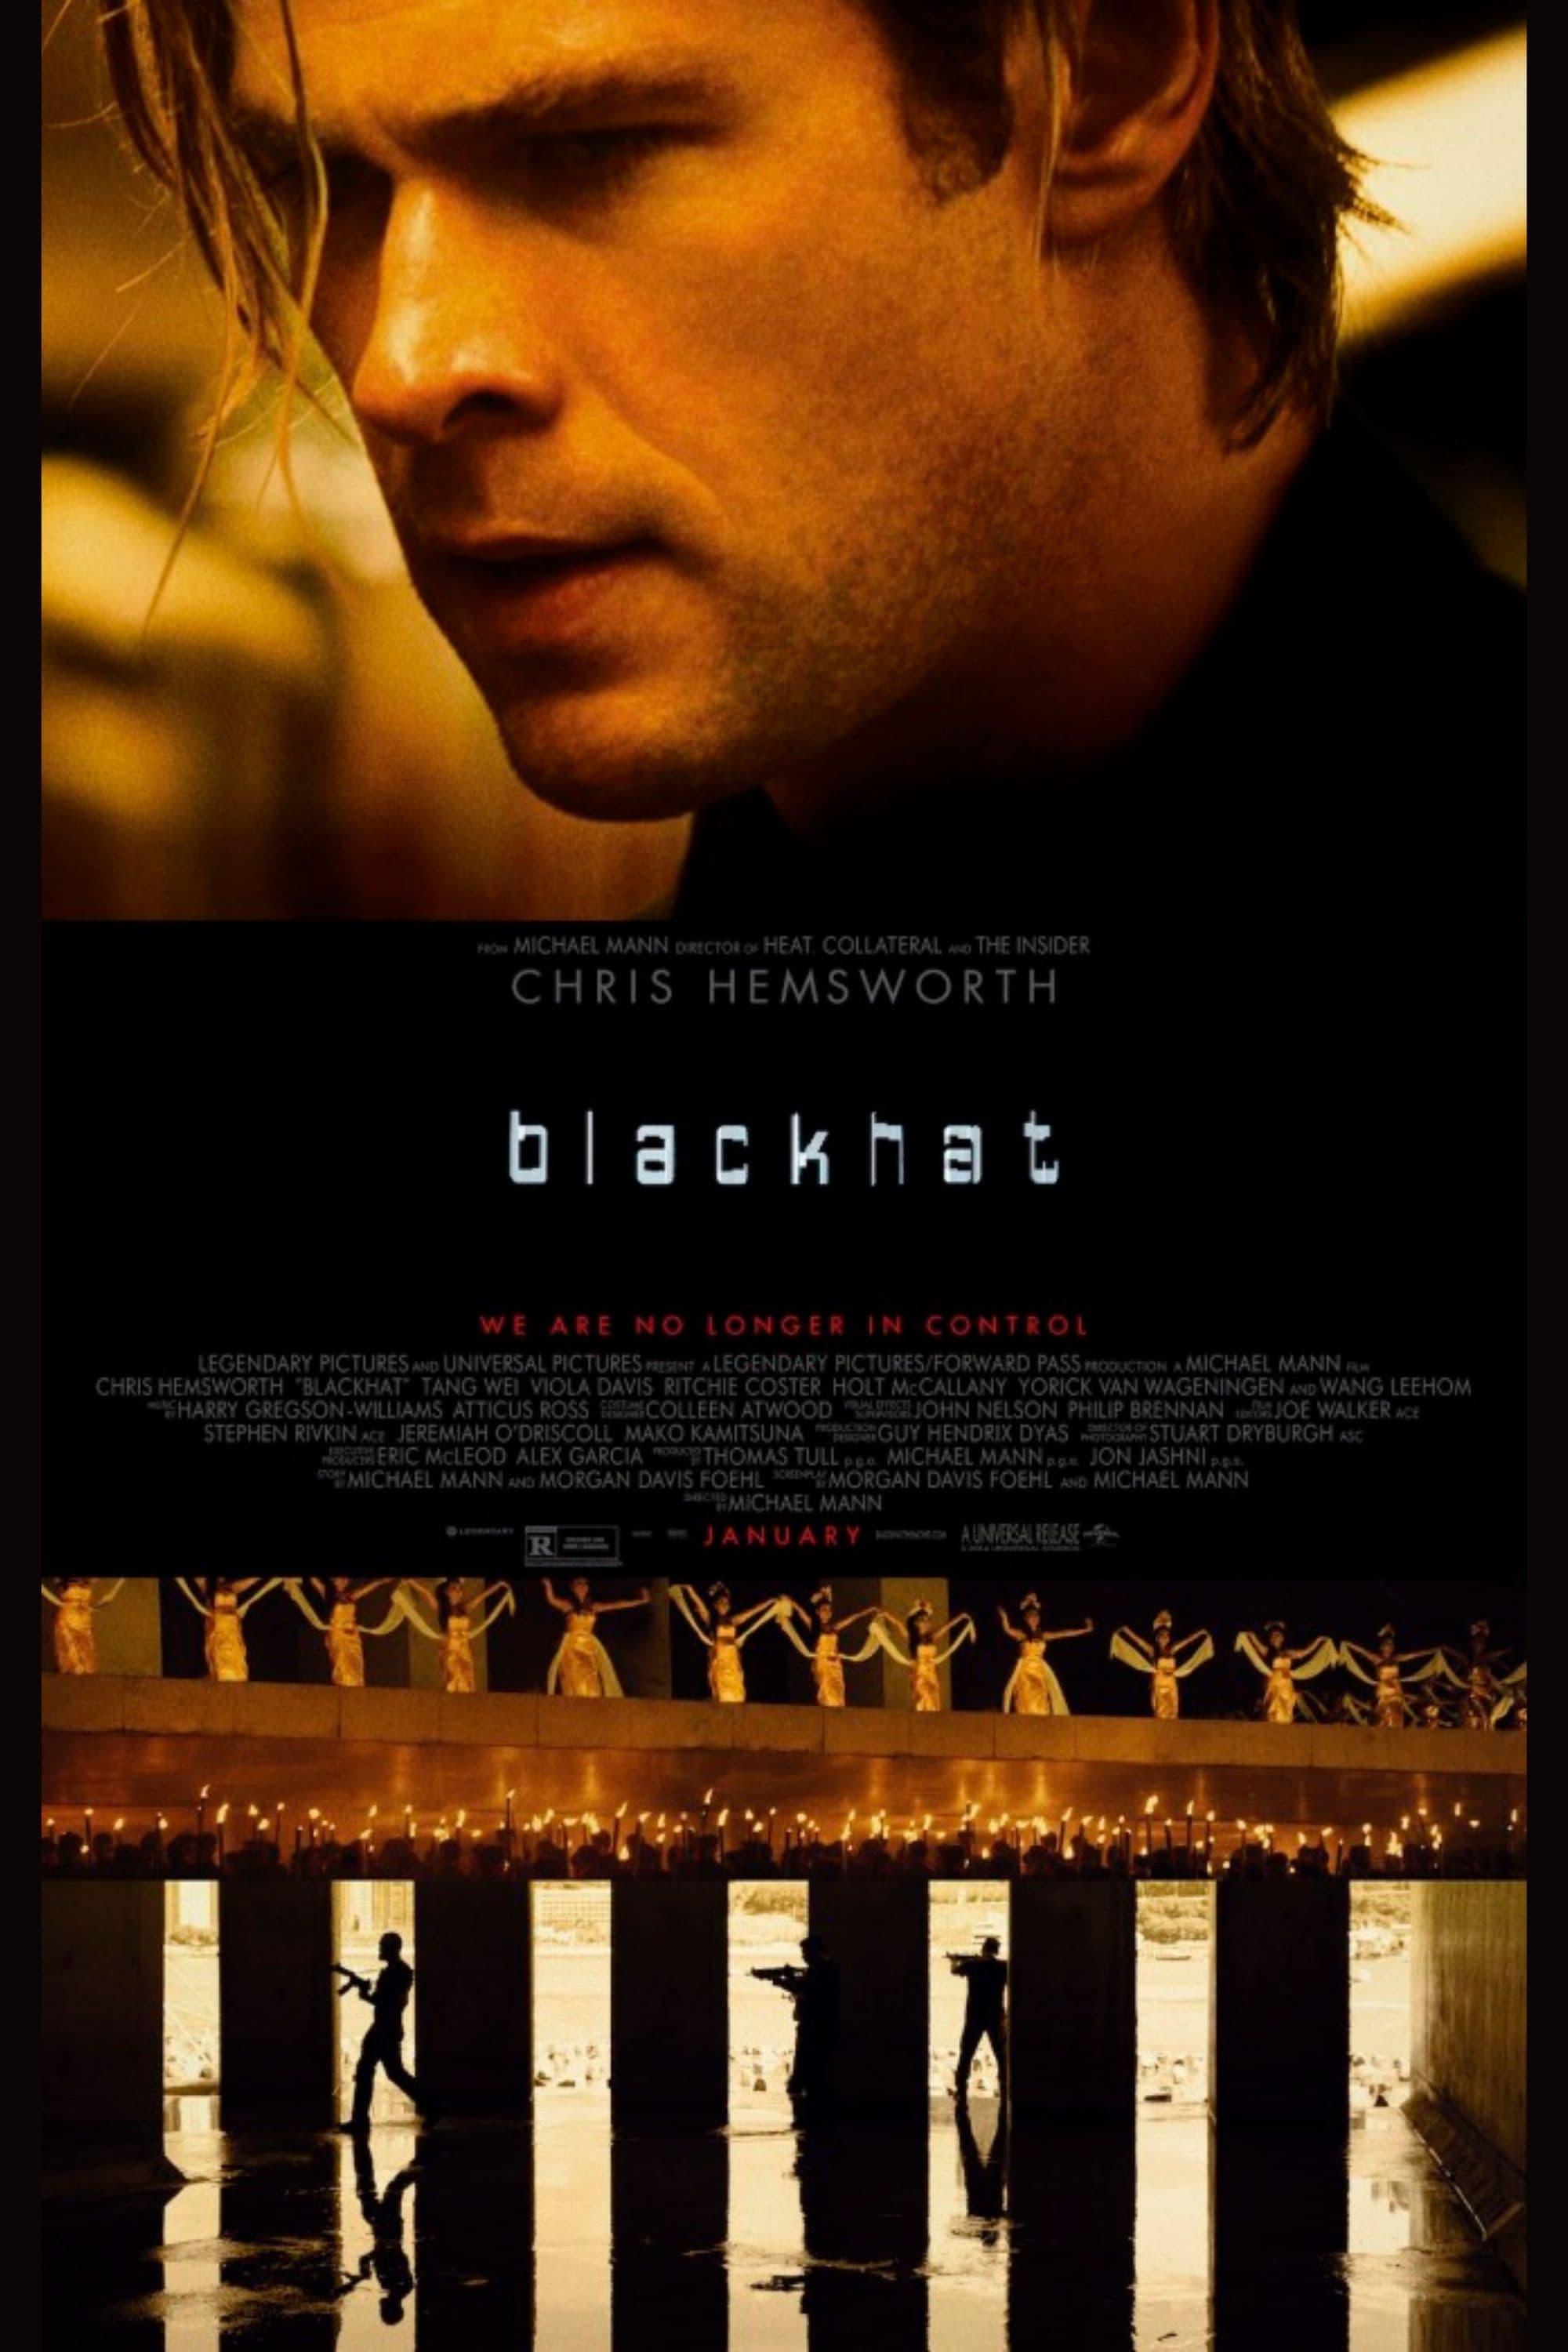 Blackhat poster